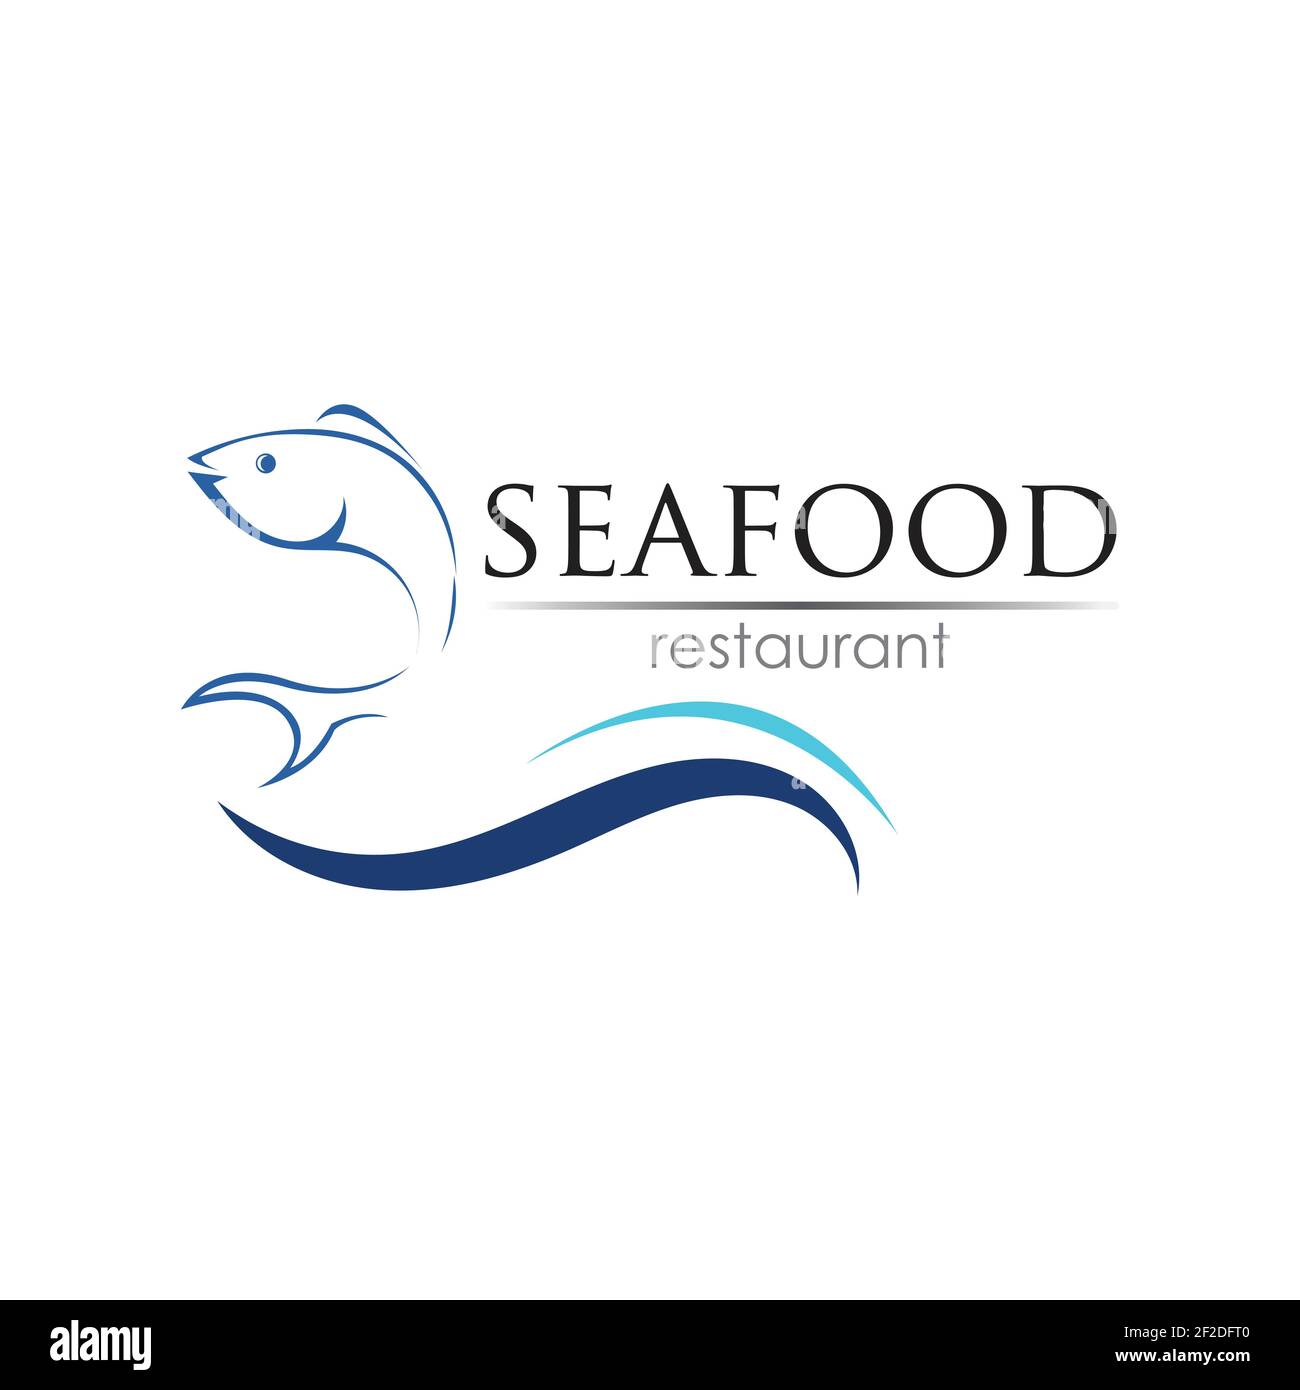 Seafood restaurant logo design. Fish, Food and Beverage logo